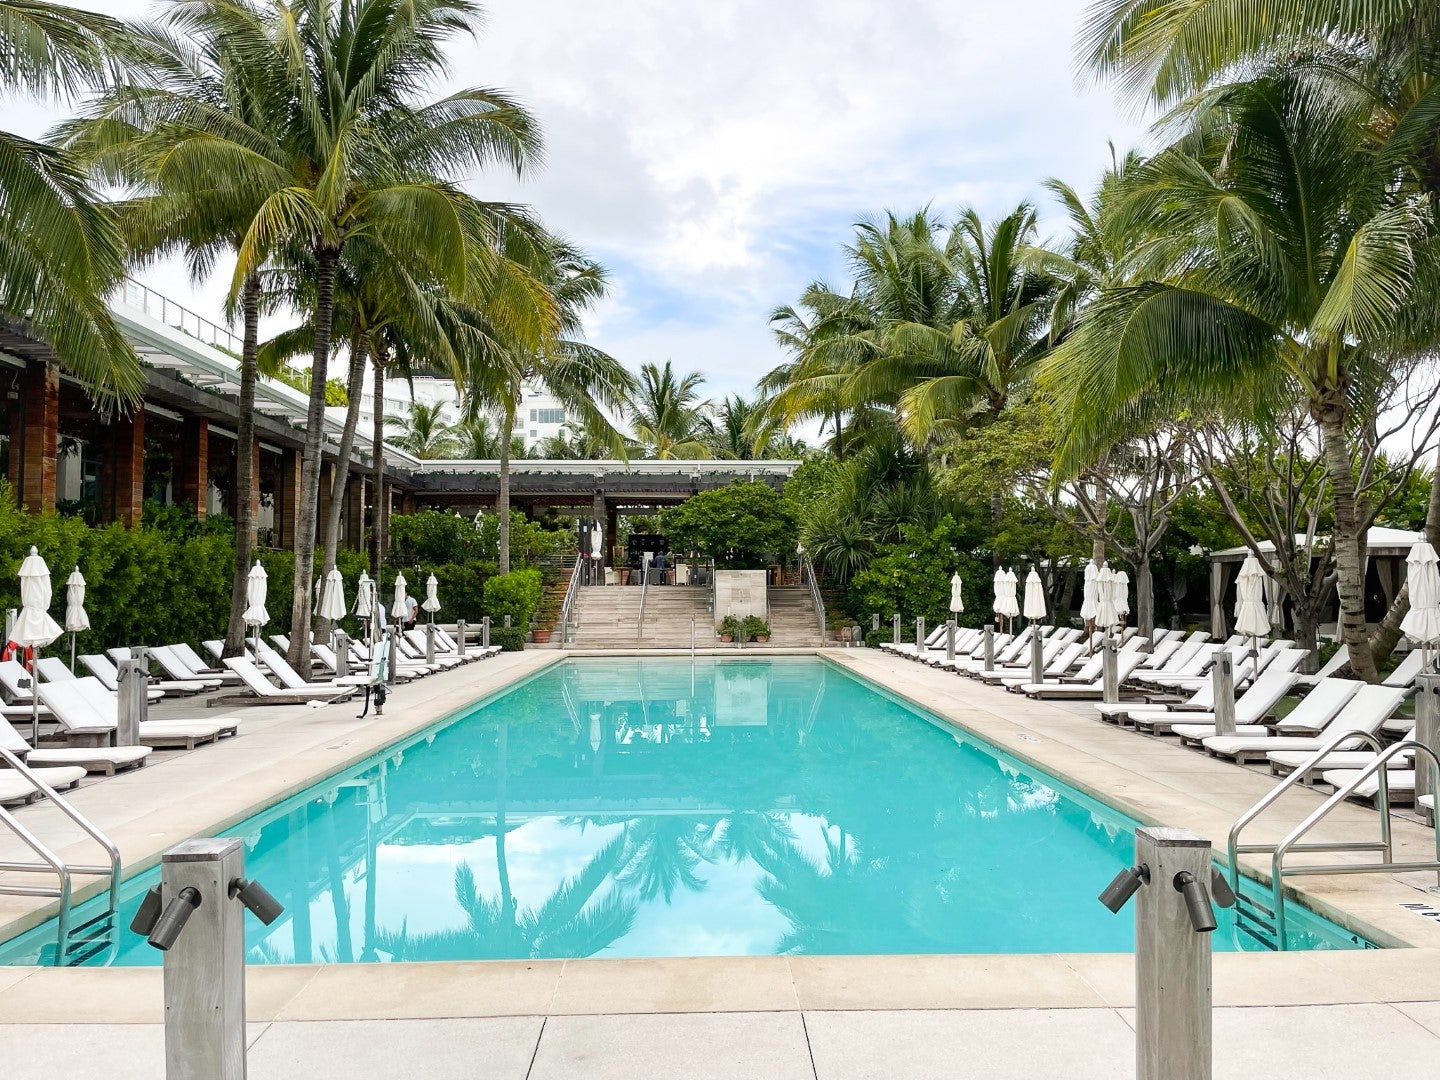 The Miami Beach EDITION Modern pool empty Marriott